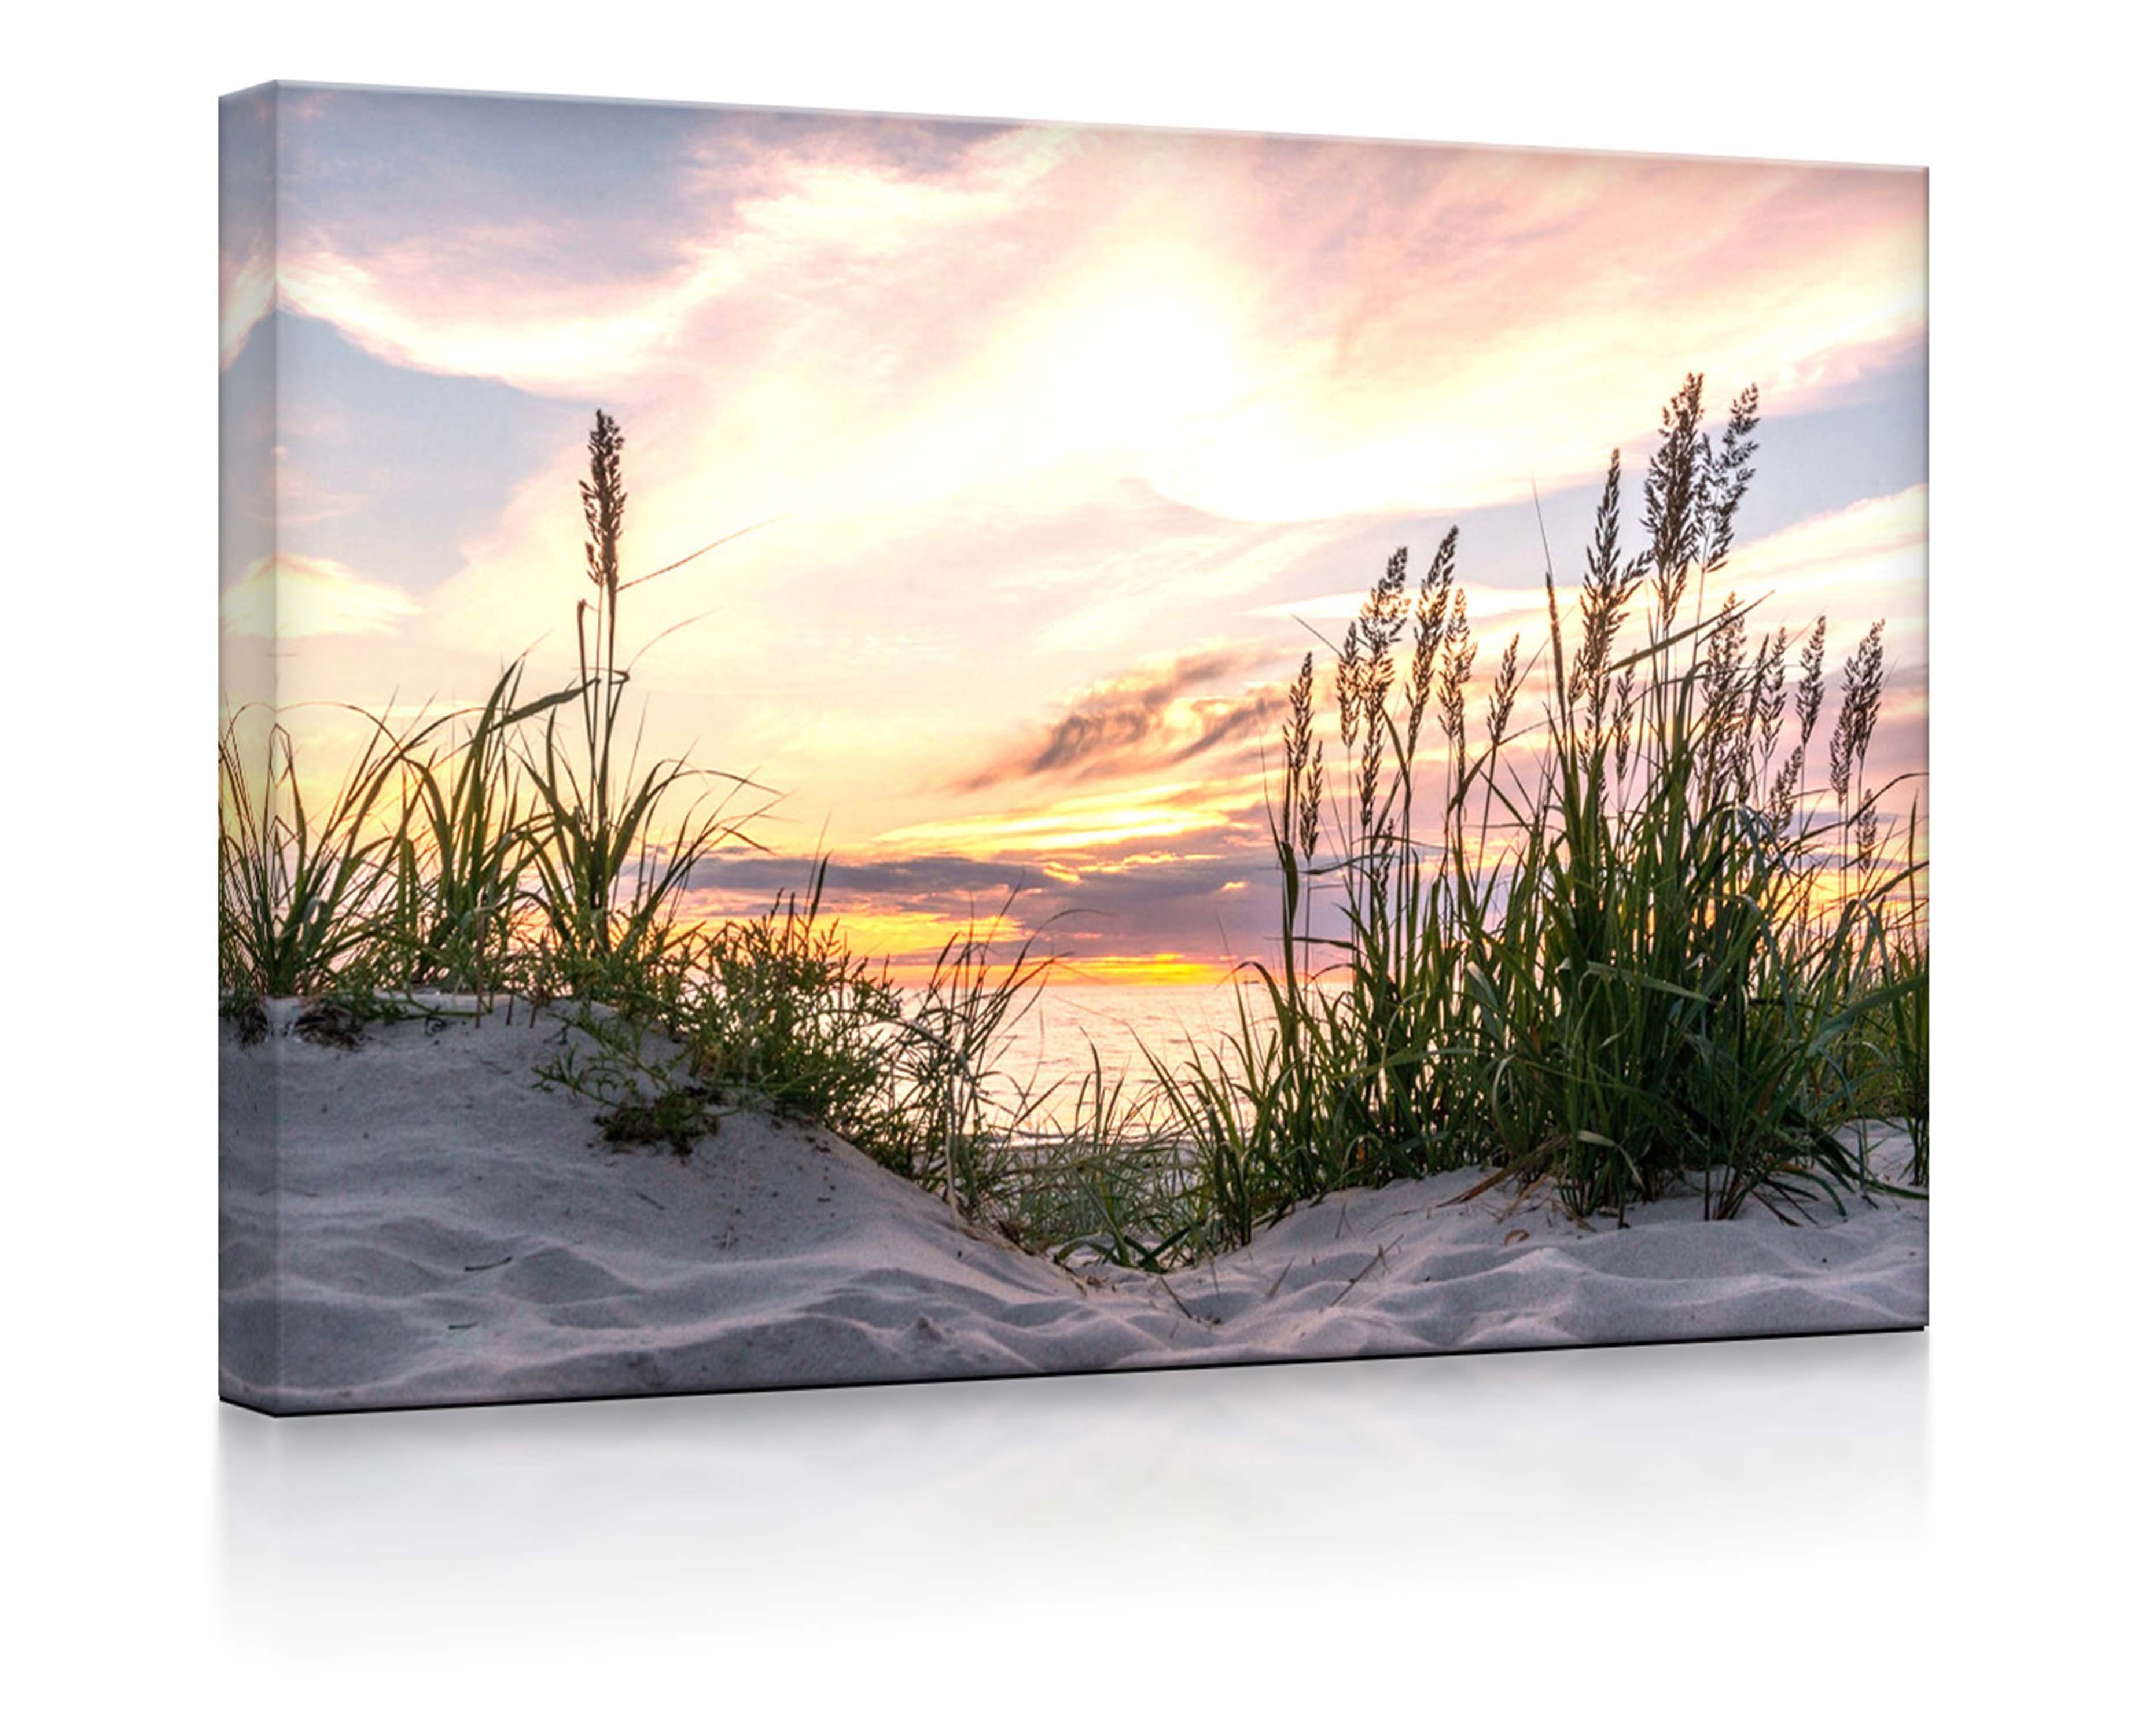 lightbox-multicolor LED-Bild Gras am Strand bei Sonnenuntergang fully lighted / 80x60cm, Leuchtbild mit Fernbedienung